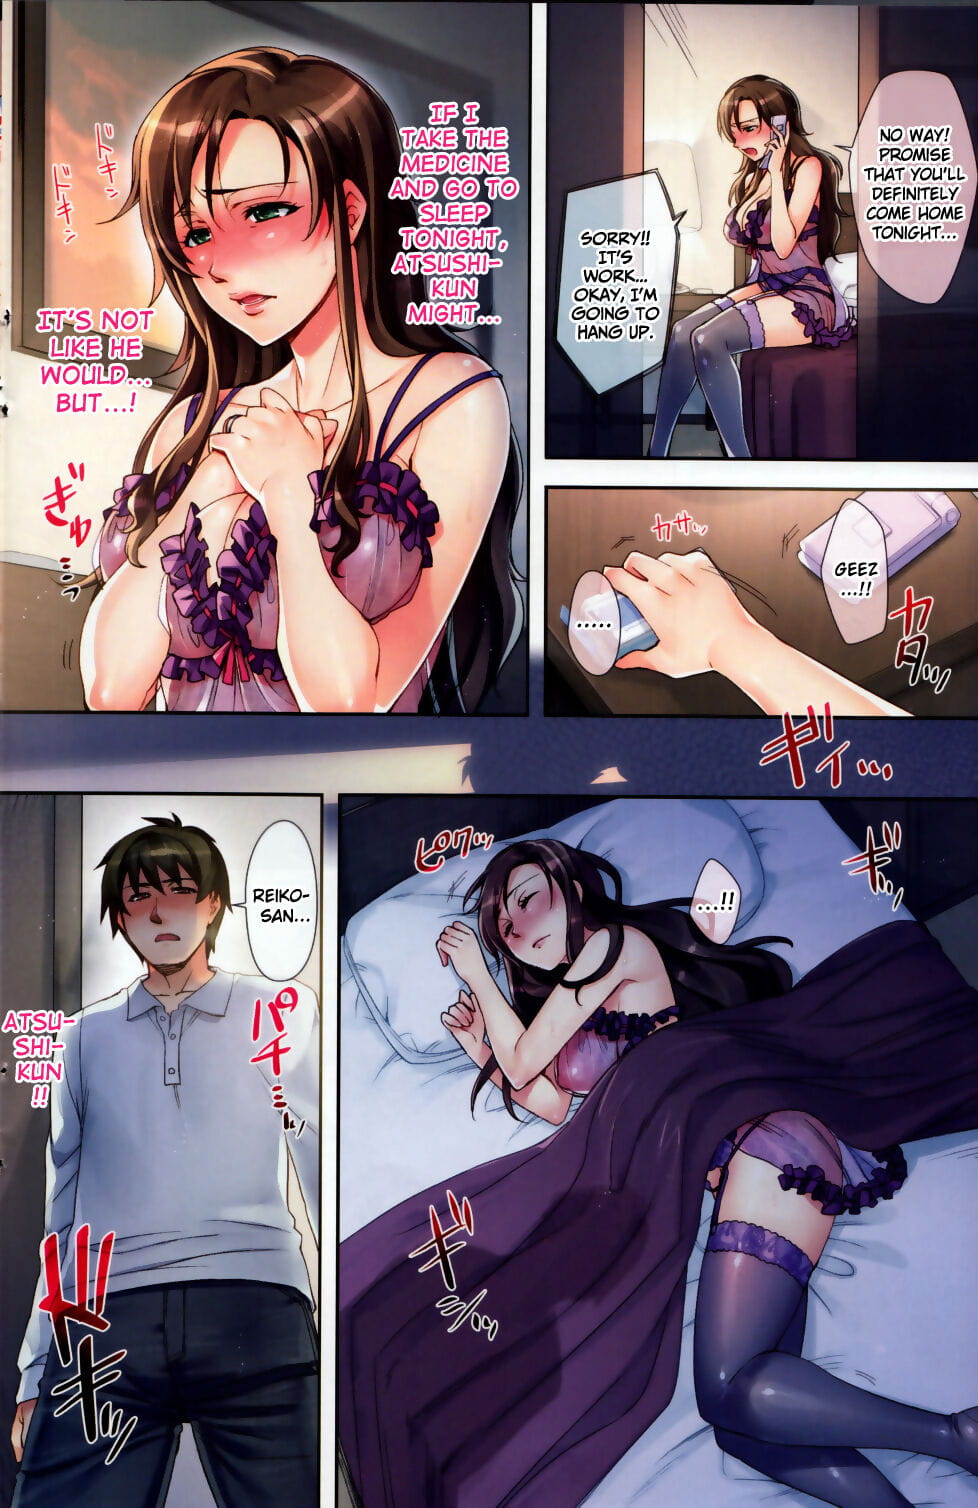 nemurenai Yoru wa - sleepless 밤 page 1